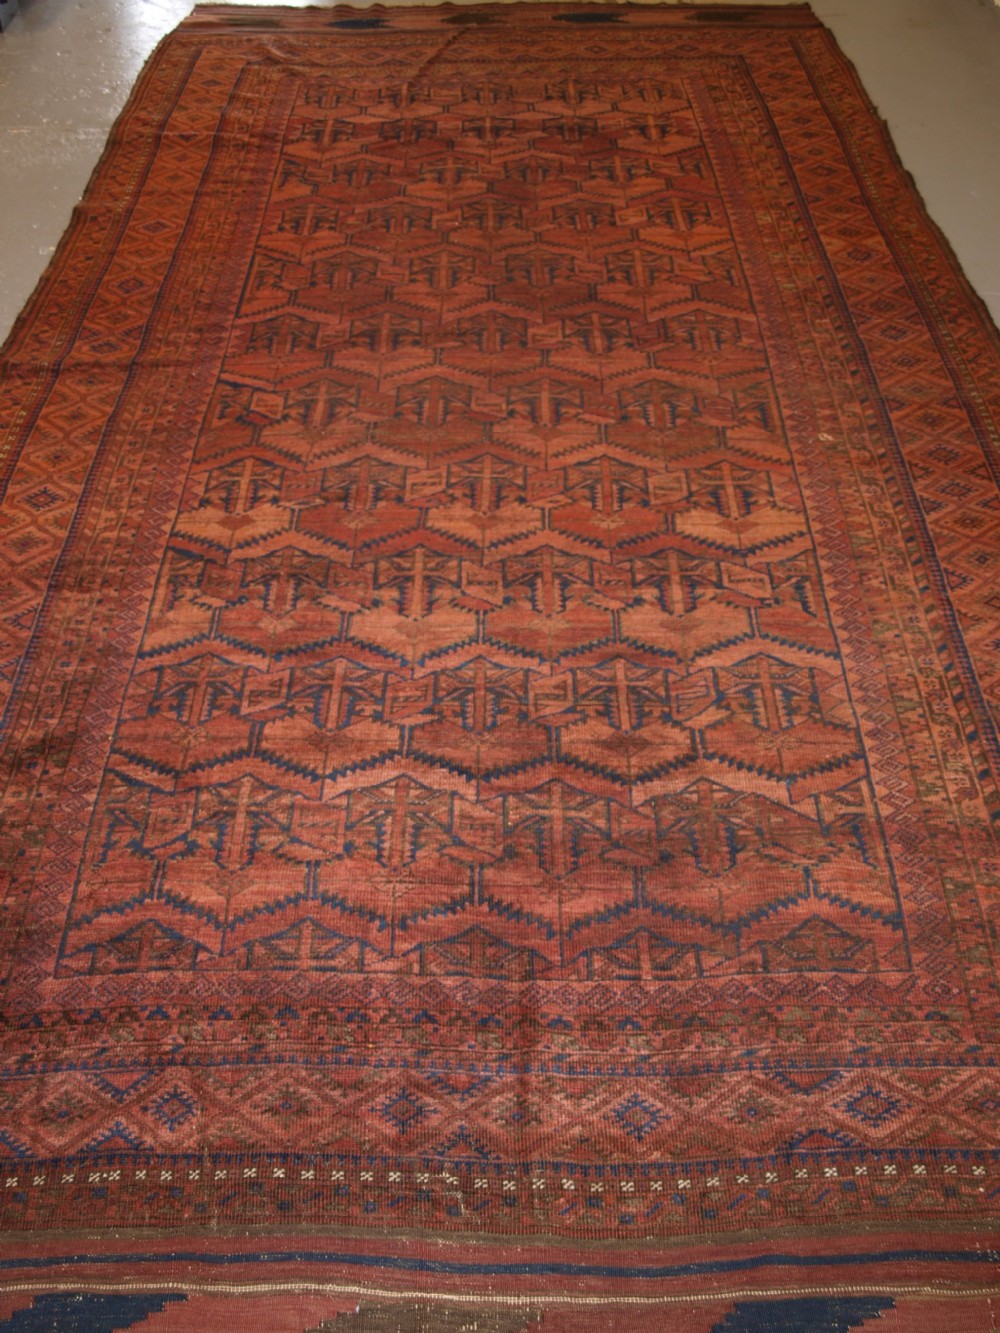 antique baluch main carpet chakhansur region south east afghanistan late 19th century